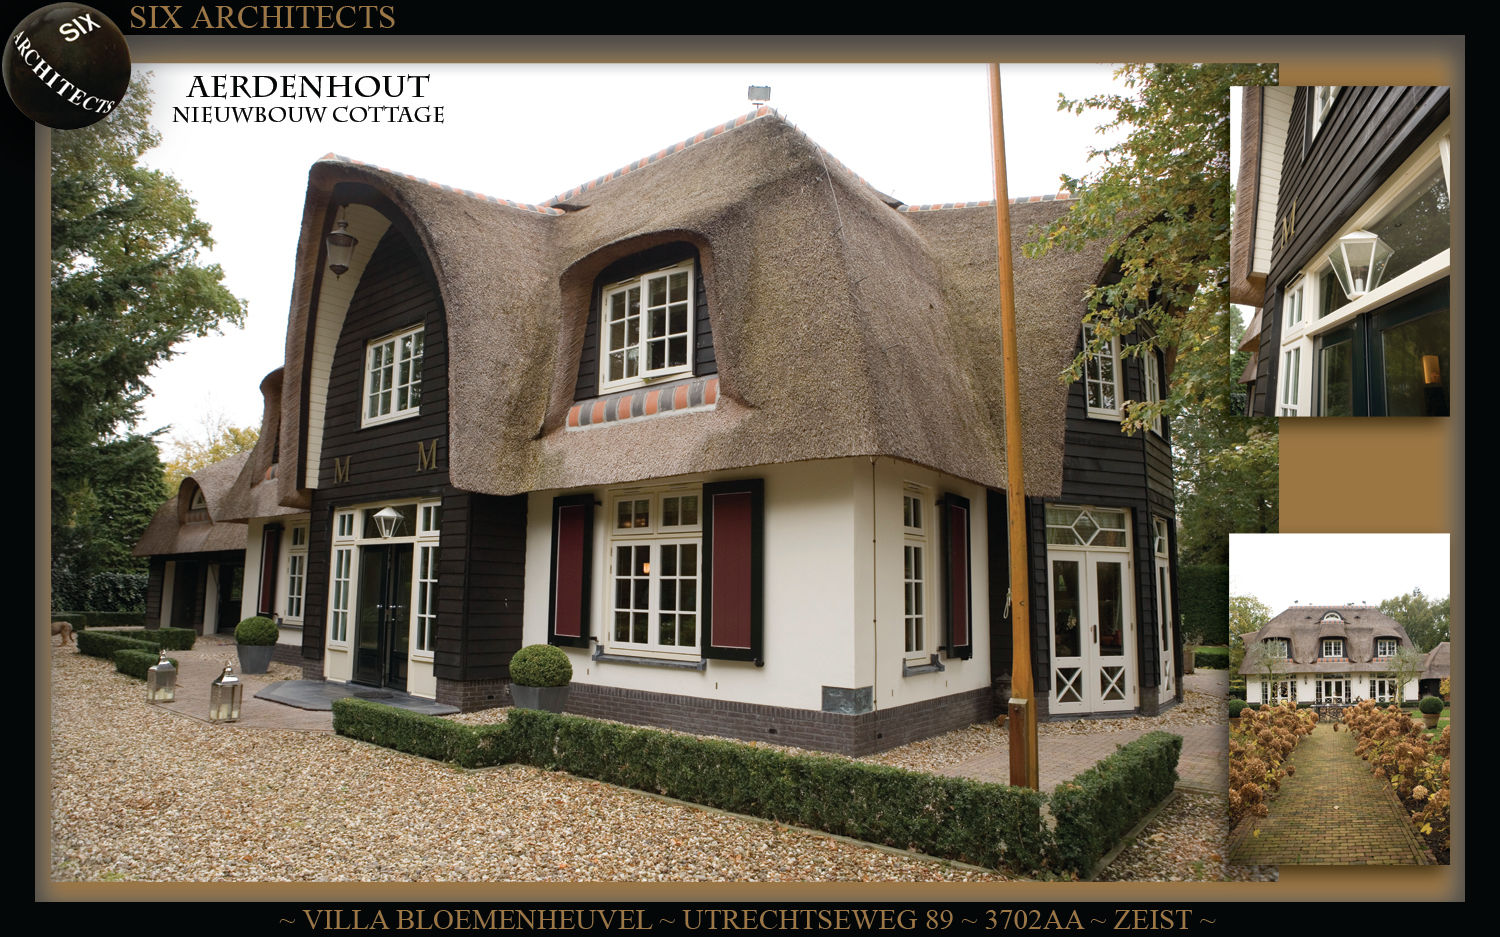 Nieuwbouw cottage Aerdenhout, six architects six architects Classic style houses